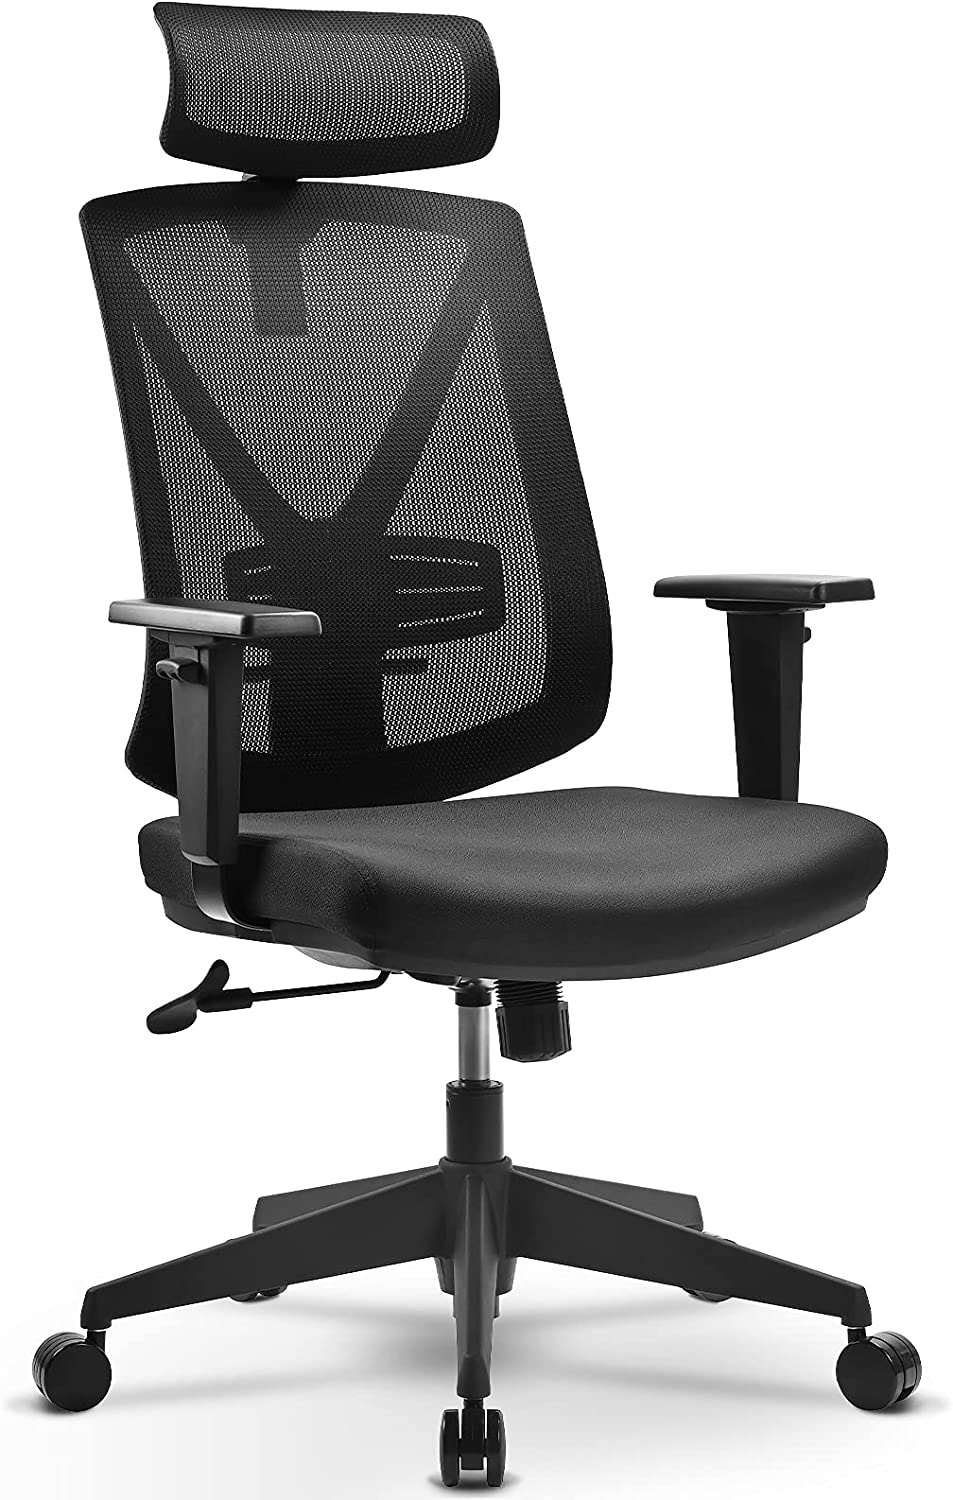 BASETBL Ergonomic Office Chair for Home, Reclining High-Back Mesh Executive Desk Chair